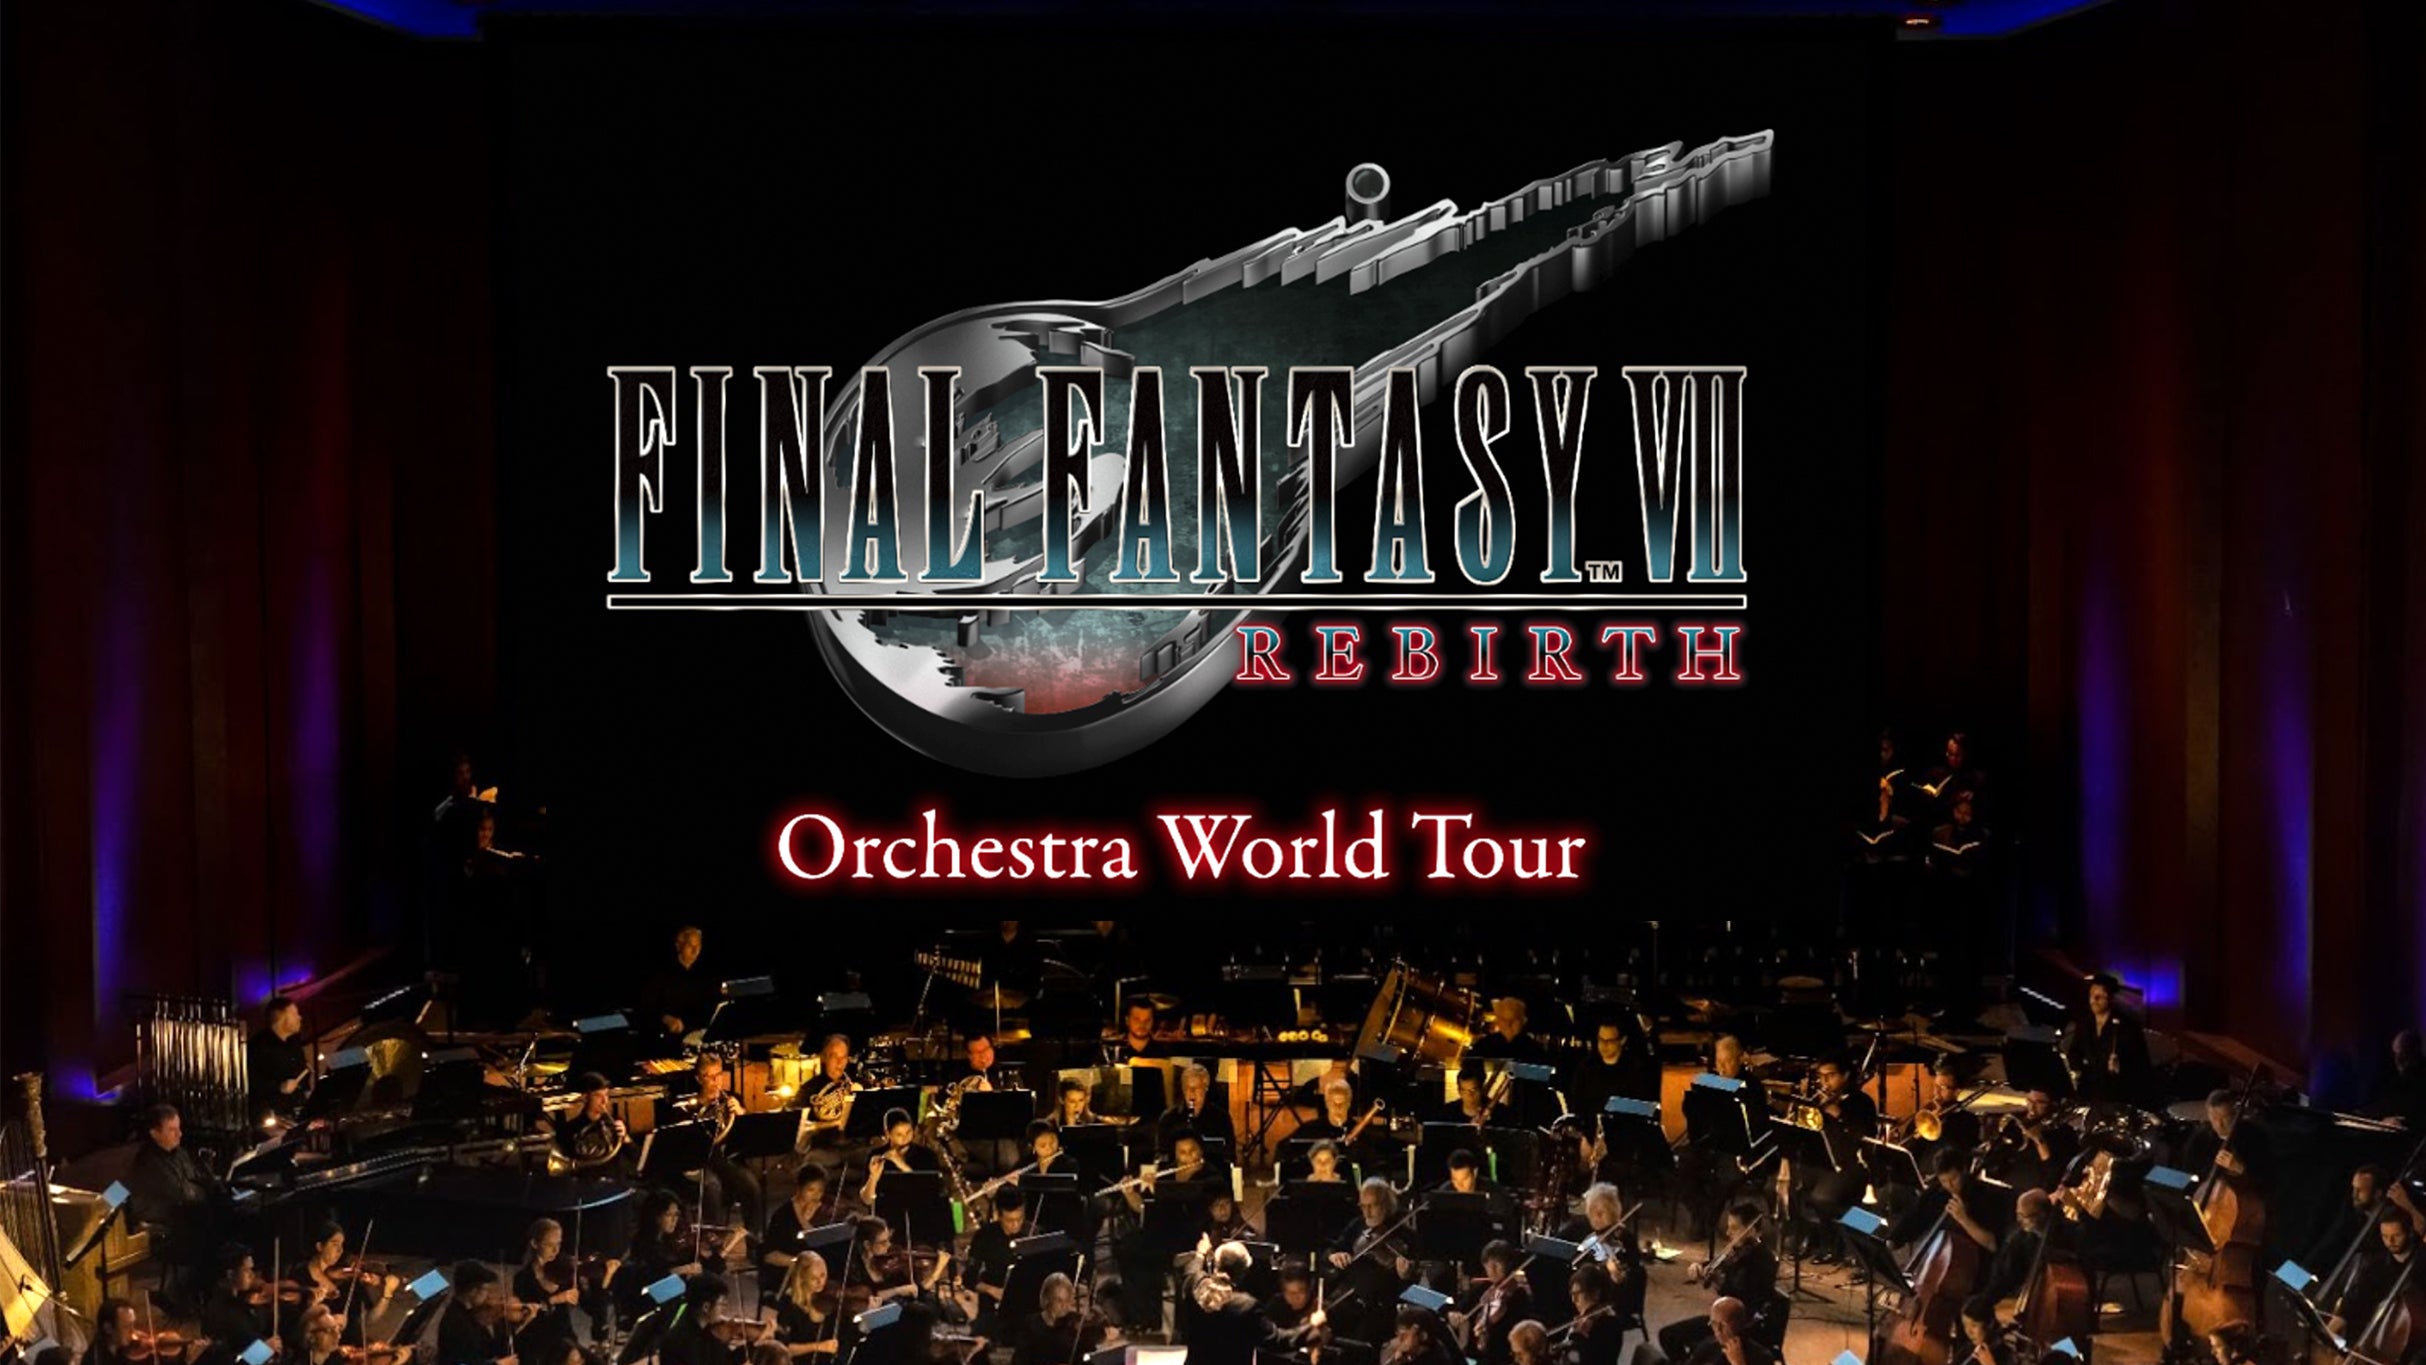 FINAL FANTASY VII REBIRTH Orchestra World Tour in San Jose promo photo for Exclusive presale offer code